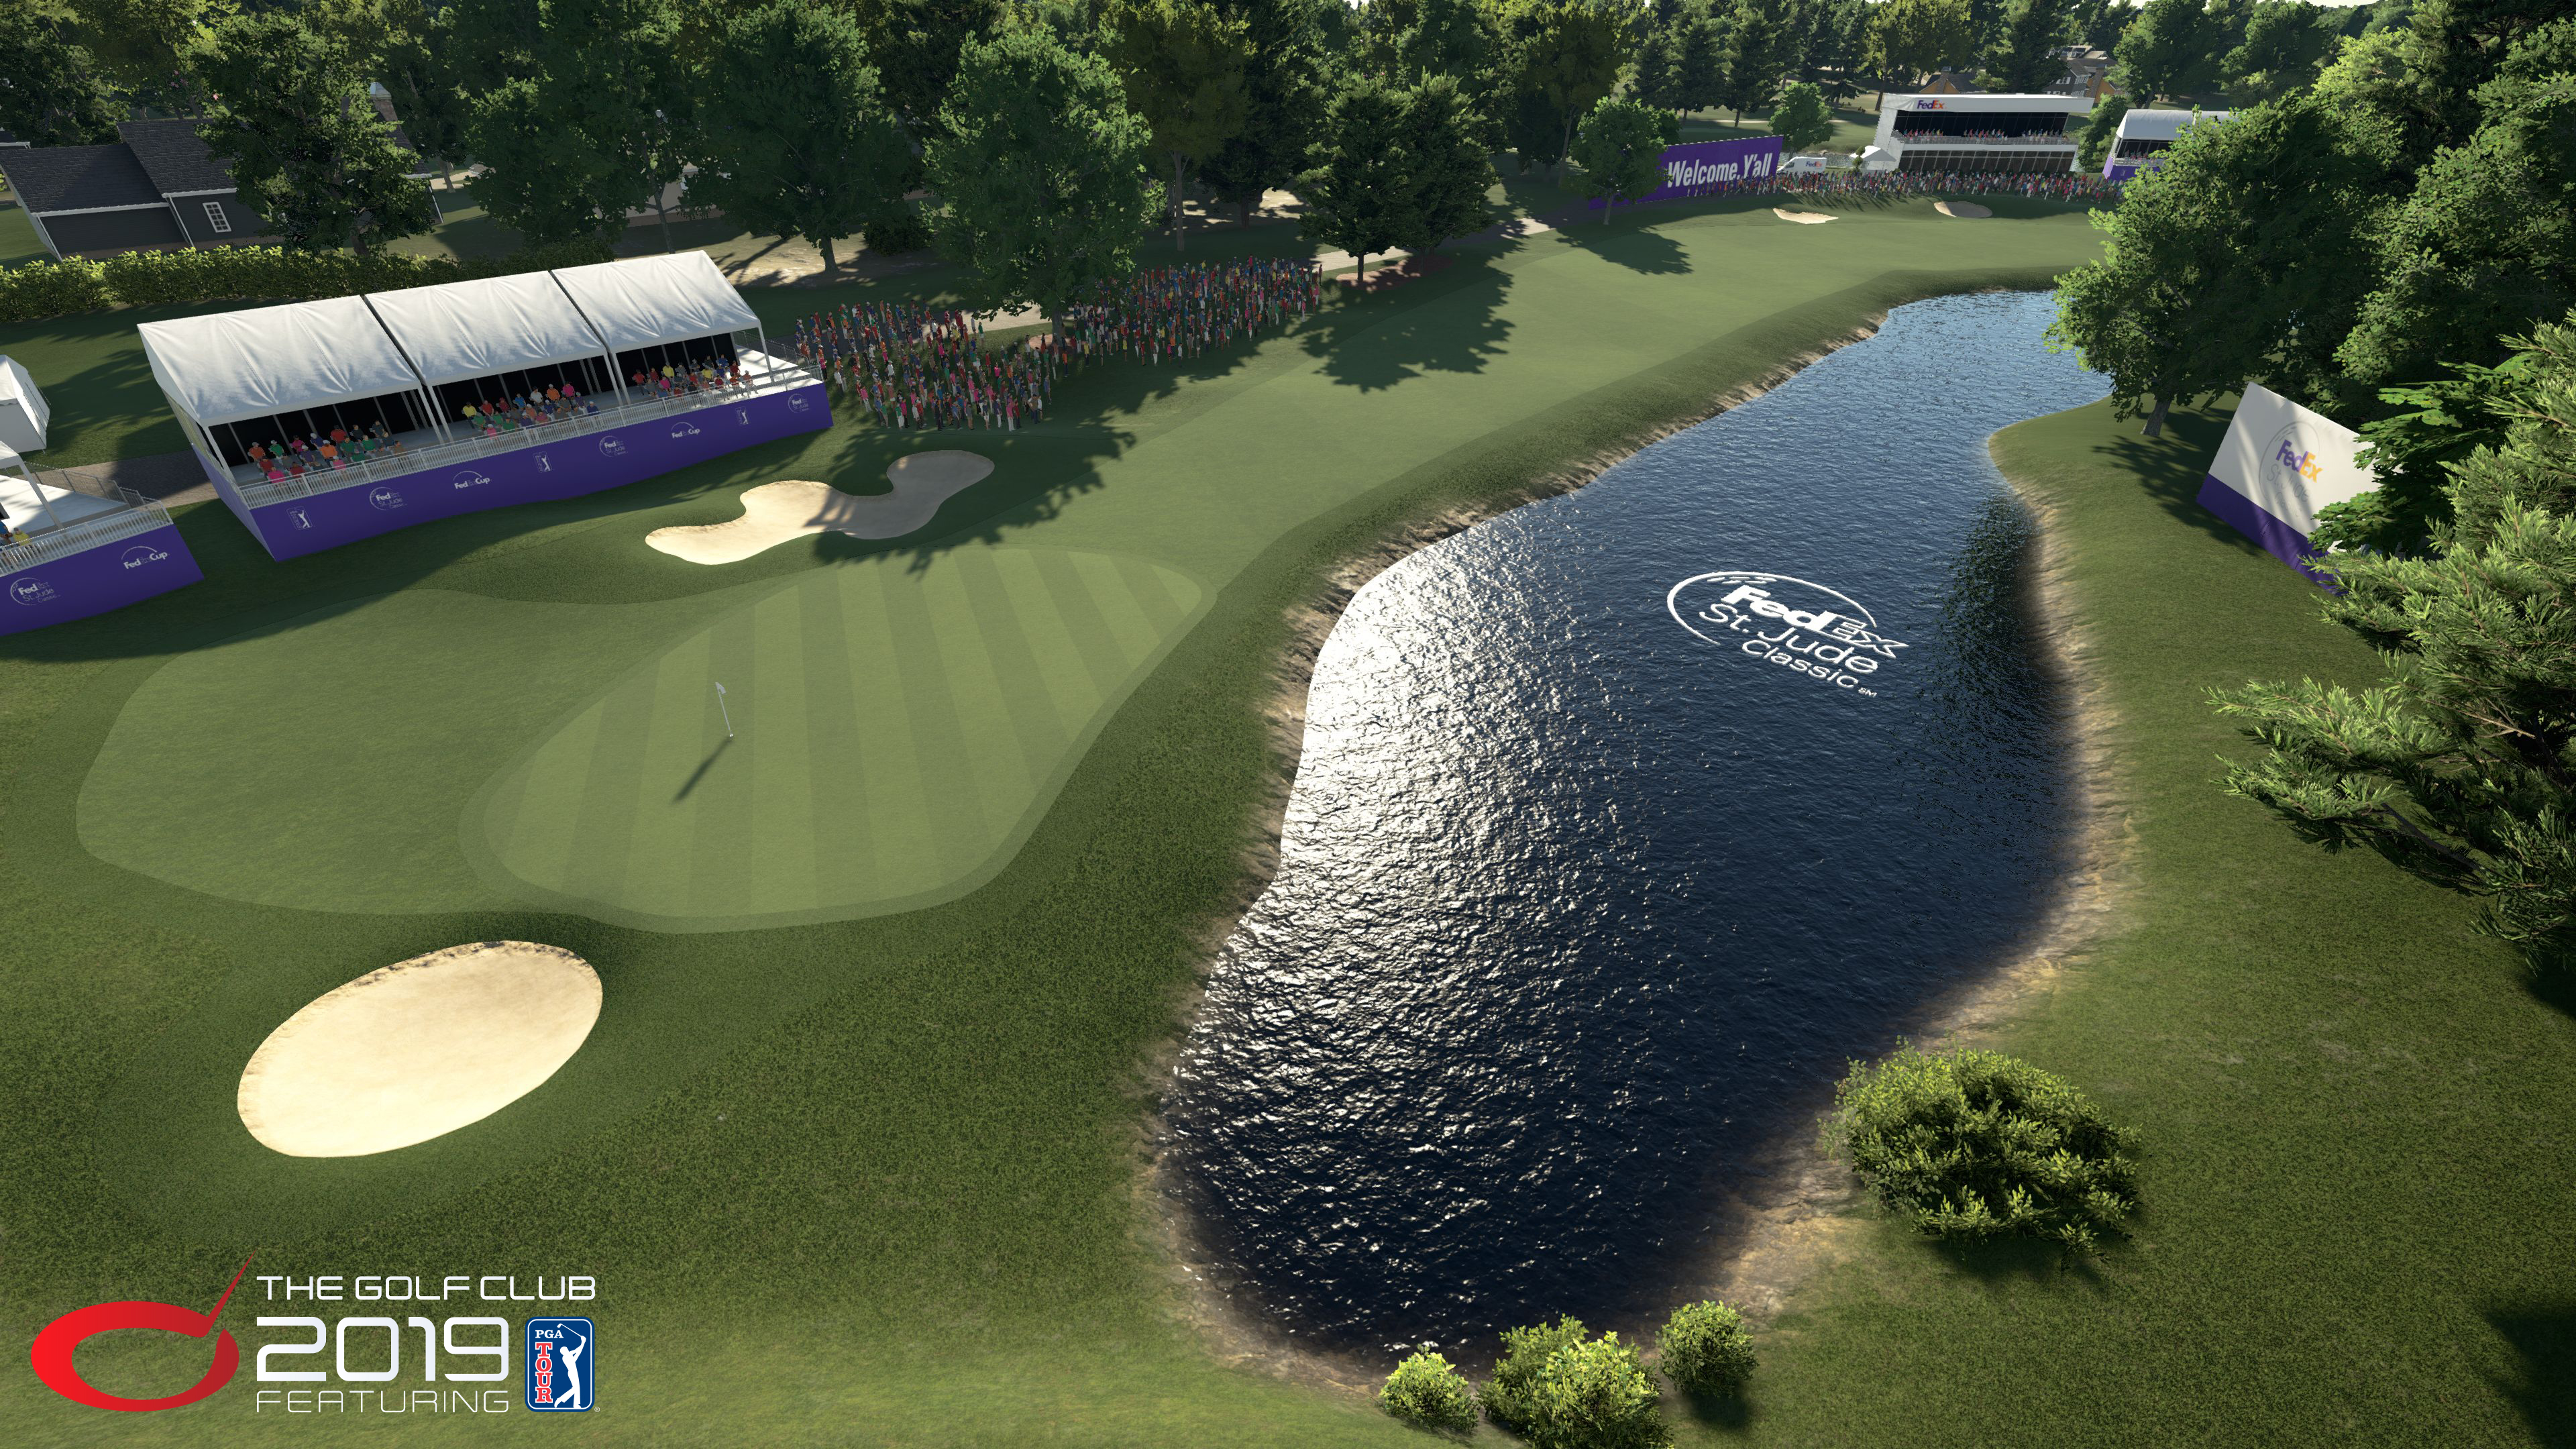 The Golf Club 2019 featuring PGA TOUR screenshot